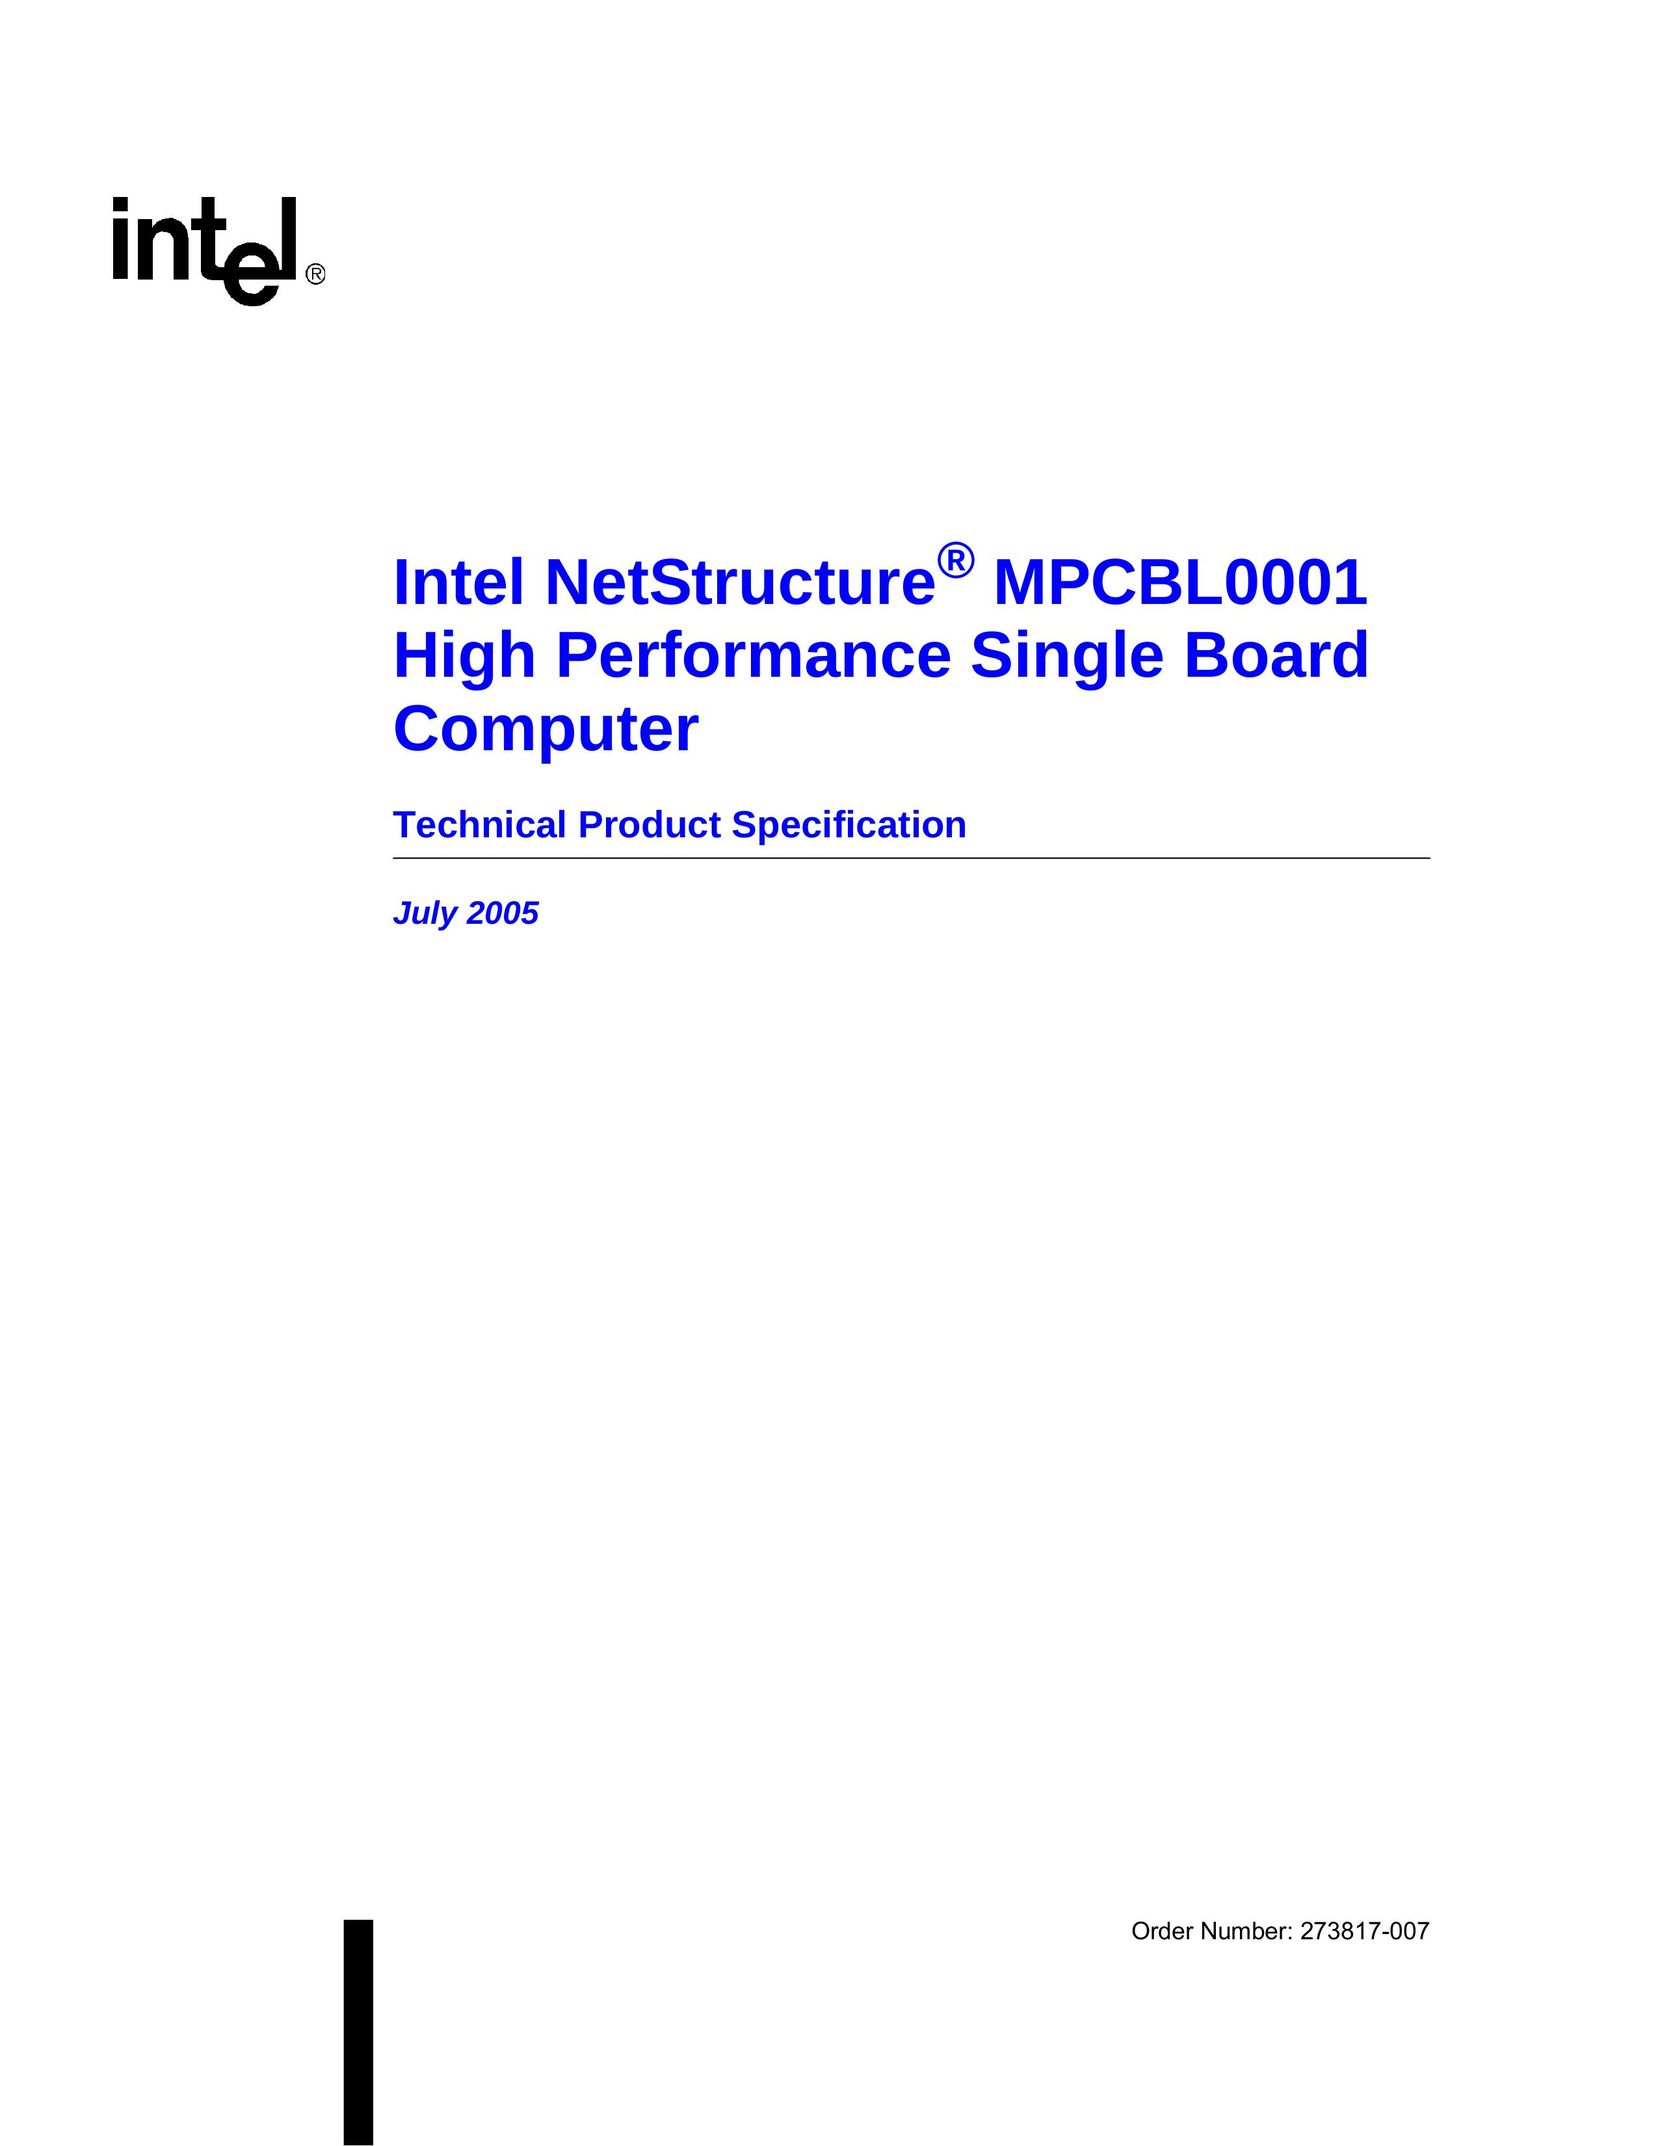 Intel MPCBL0001 Laptop User Manual